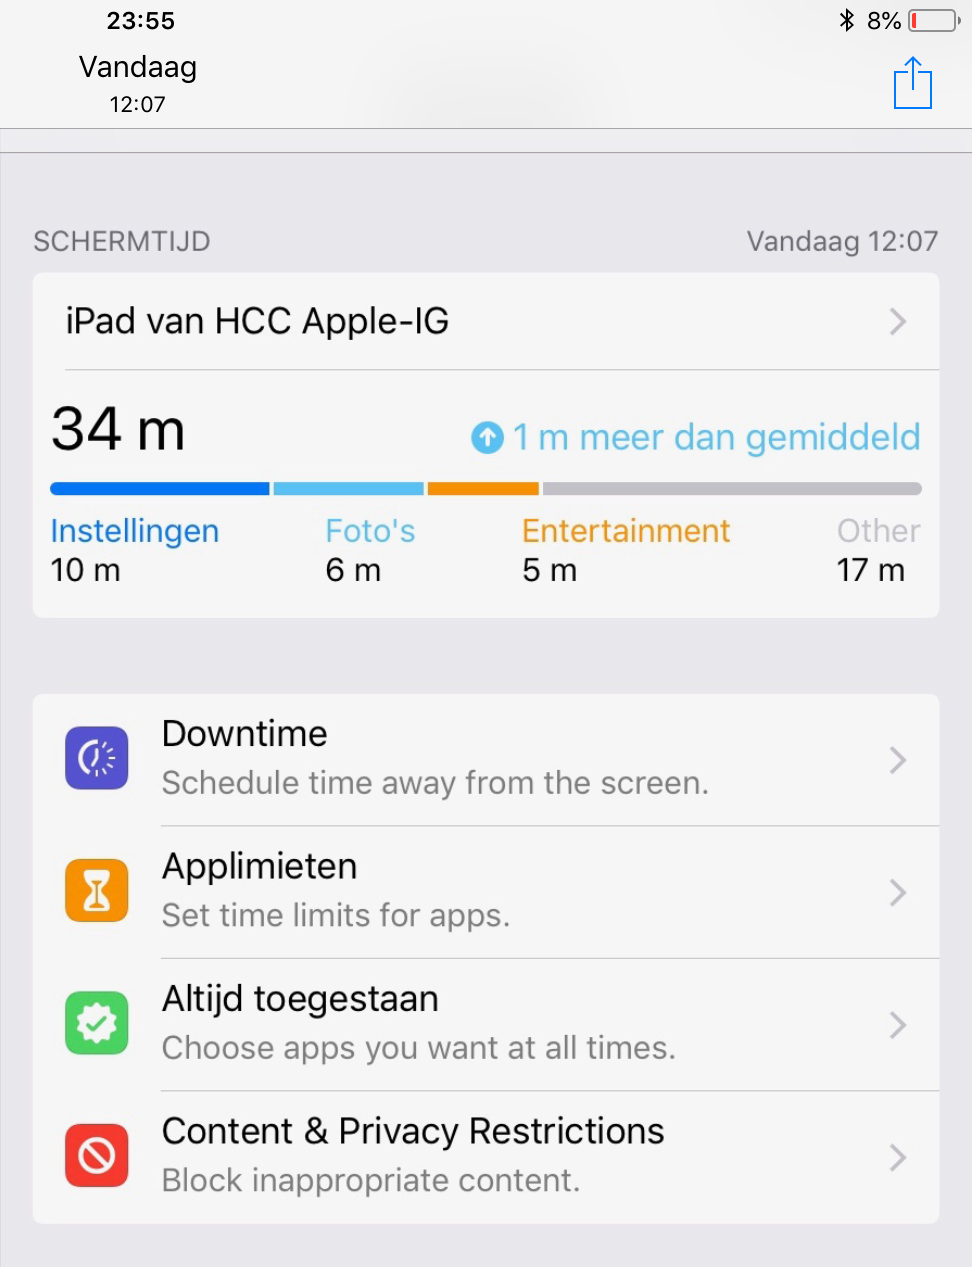 3a IOS 12 schermtijd iPad HCCapple